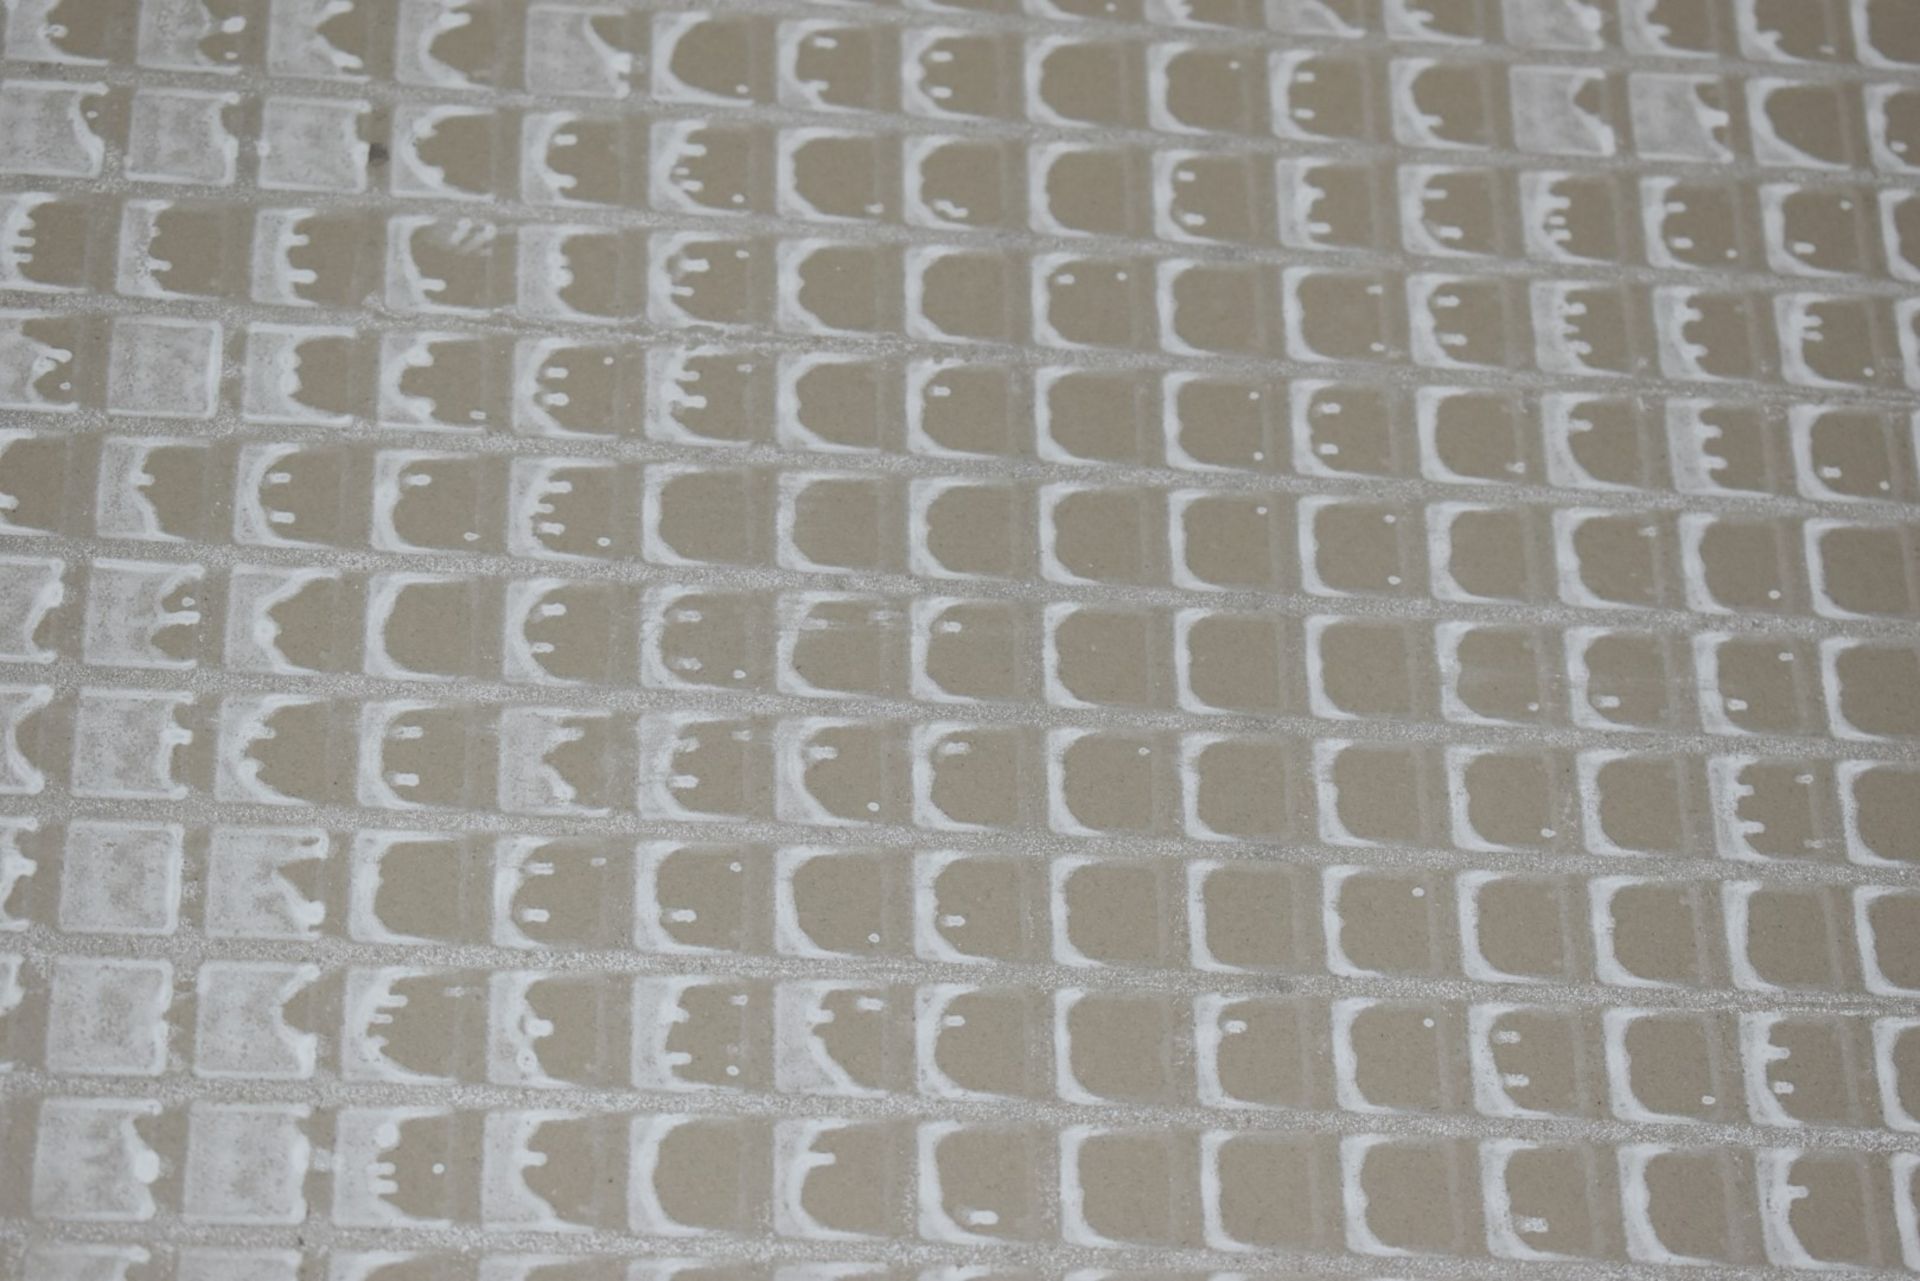 12 x Boxes of RAK Porcelain Floor or Wall Tiles - Concrete Sand Design in Beige - 30 x 60 - Image 6 of 8